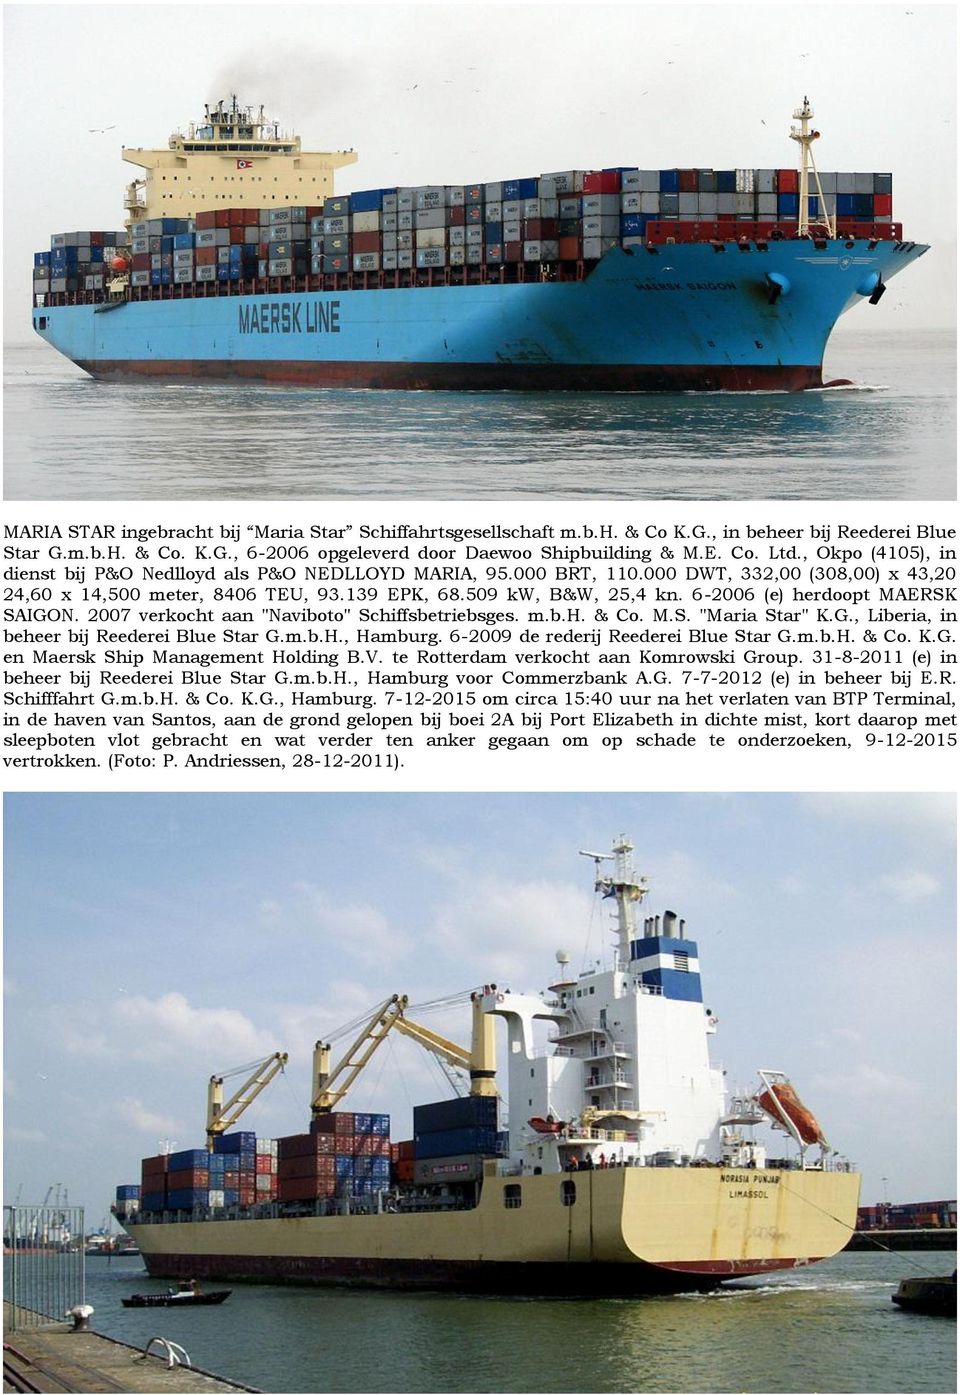 6-2006 (e) herdoopt MAERSK SAIGON. 2007 verkocht aan "Naviboto" Schiffsbetriebsges. m.b.h. & Co. M.S. "Maria Star" K.G., Liberia, in beheer bij Reederei Blue Star G.m.b.H., Hamburg.